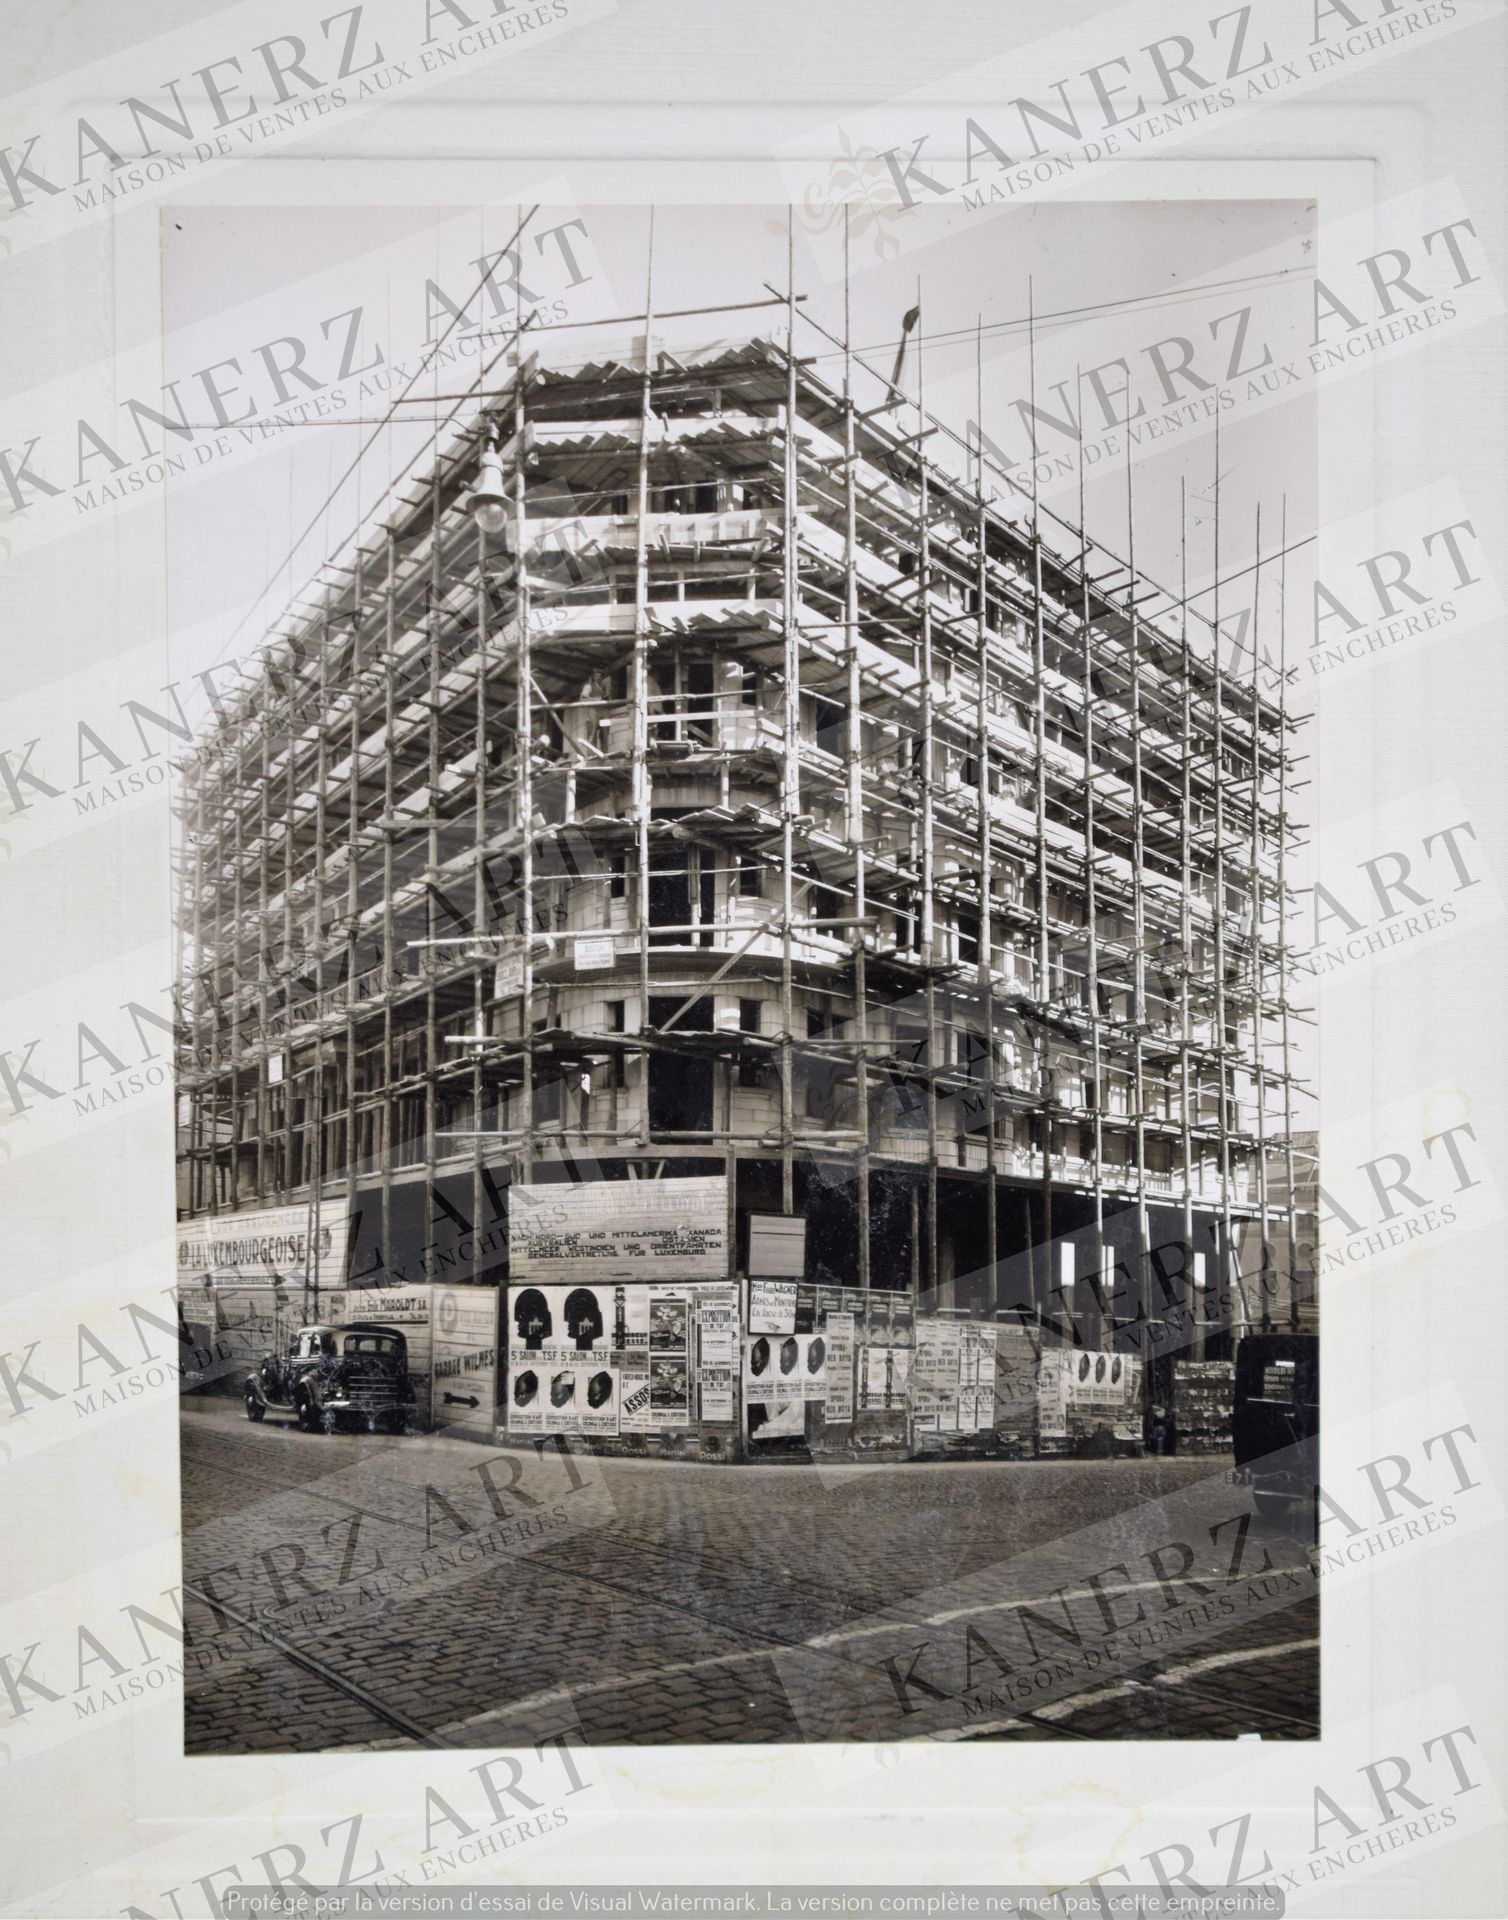 Null (摄影)粘贴在坚固纸板上的大型照片，拍摄者为摄影师Bernard KUTTER，日期为1933年，汽车和有趣的海报粘贴在栅栏上，22.5 x 16厘米